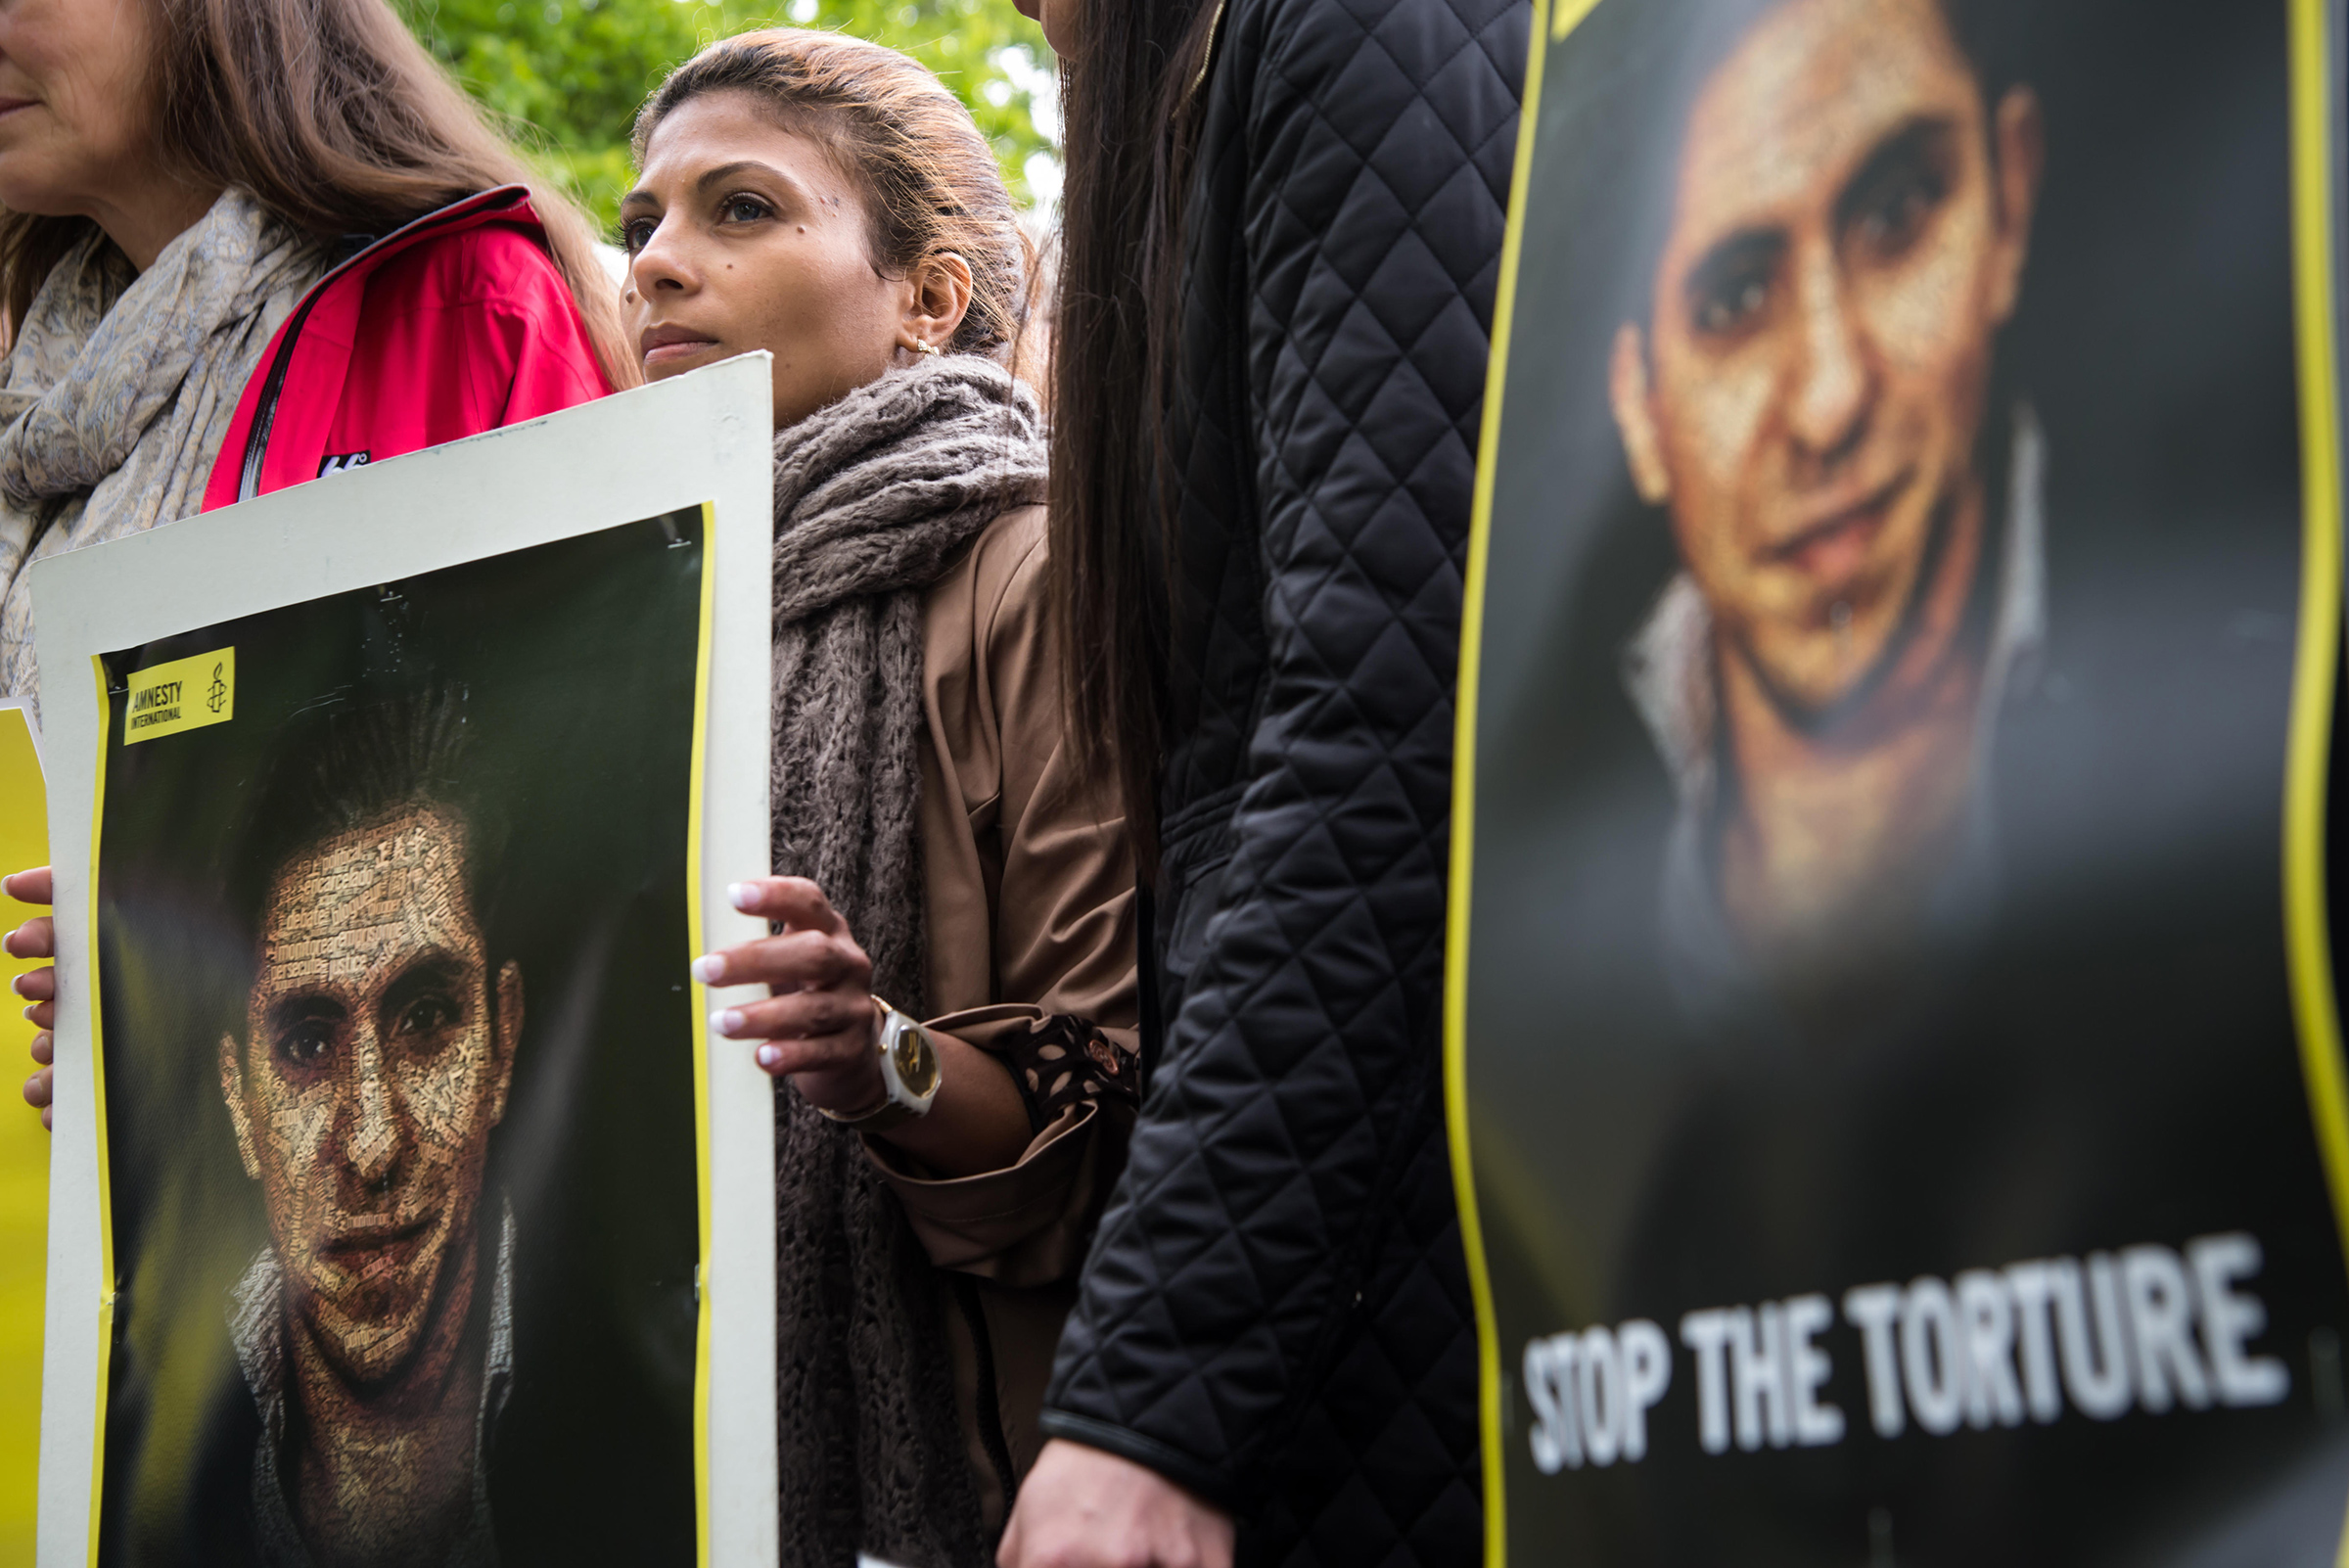 Ensaf Haidar, wife of imprisoned Saudi Arabian blogger Raif Badawi, protests for his release.